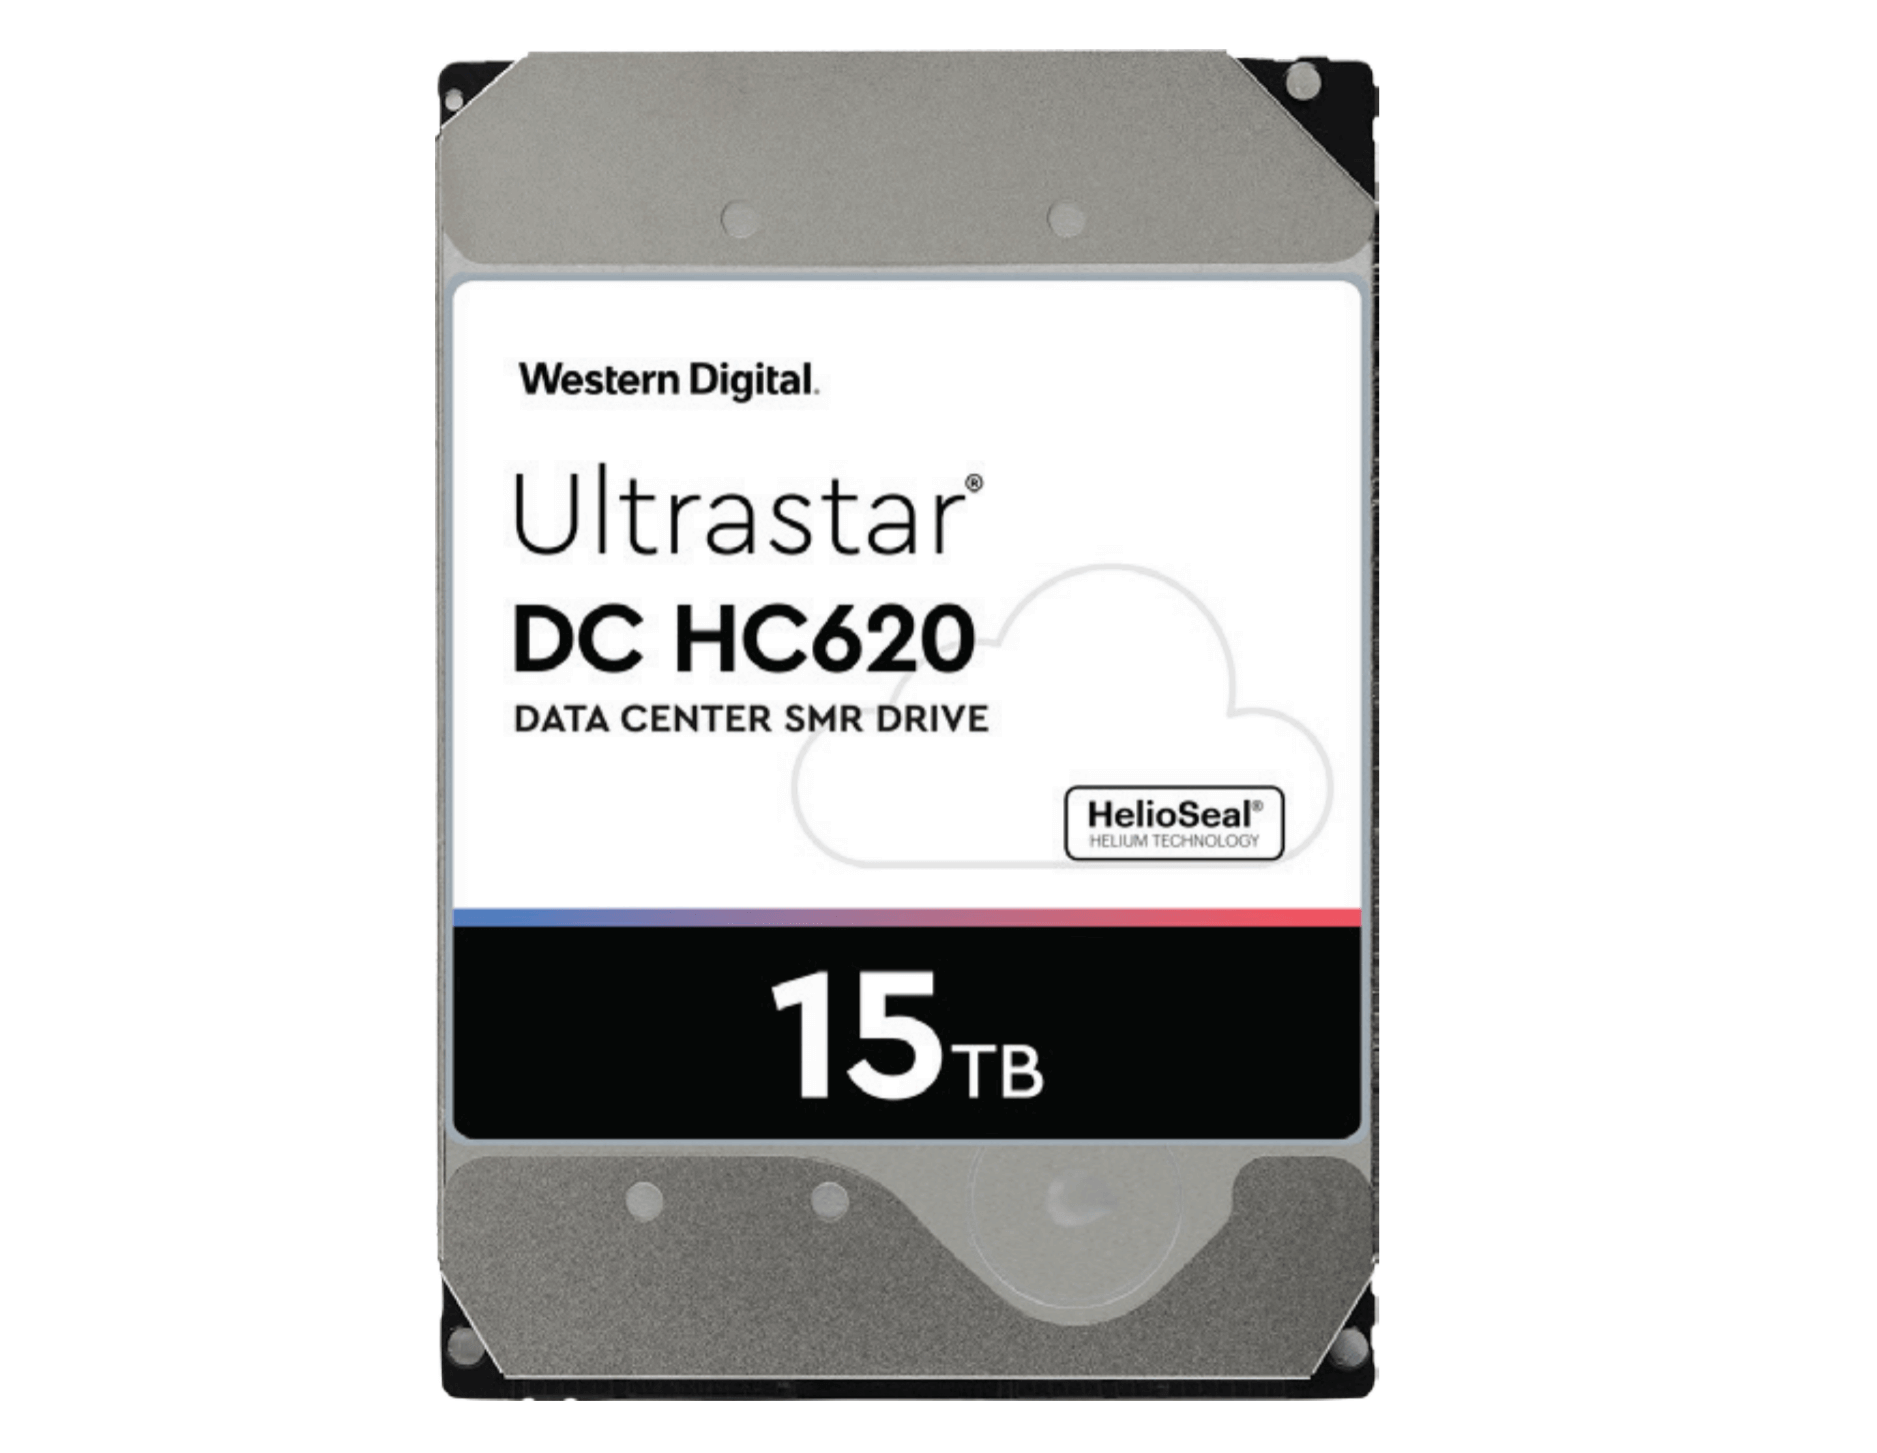 Western Digital pushes boundaries with a 15TB Ultrastar hard drive